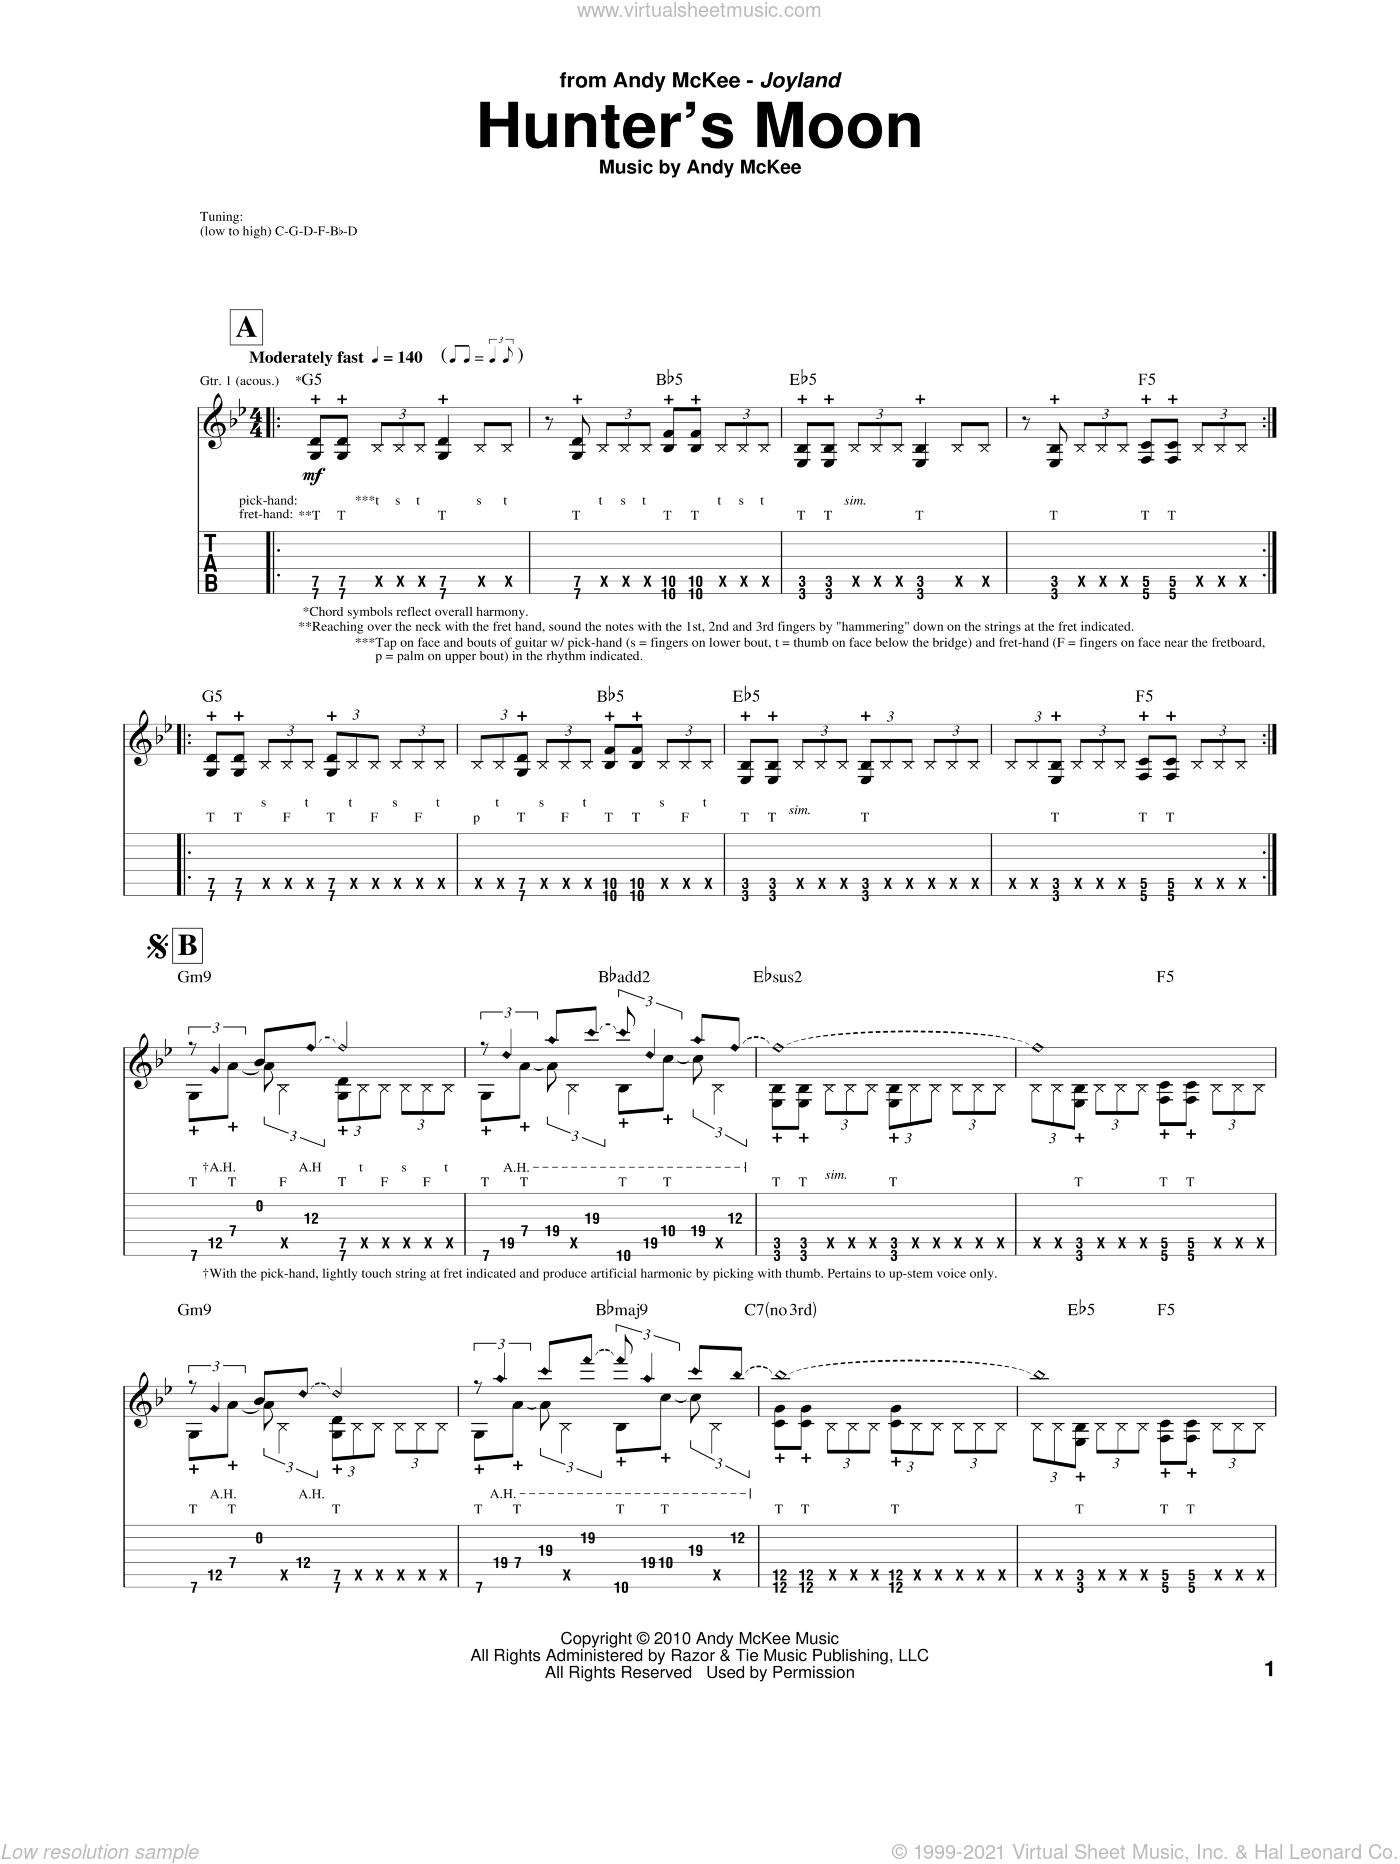 andy mckee drifting guitar tab pdf torrent